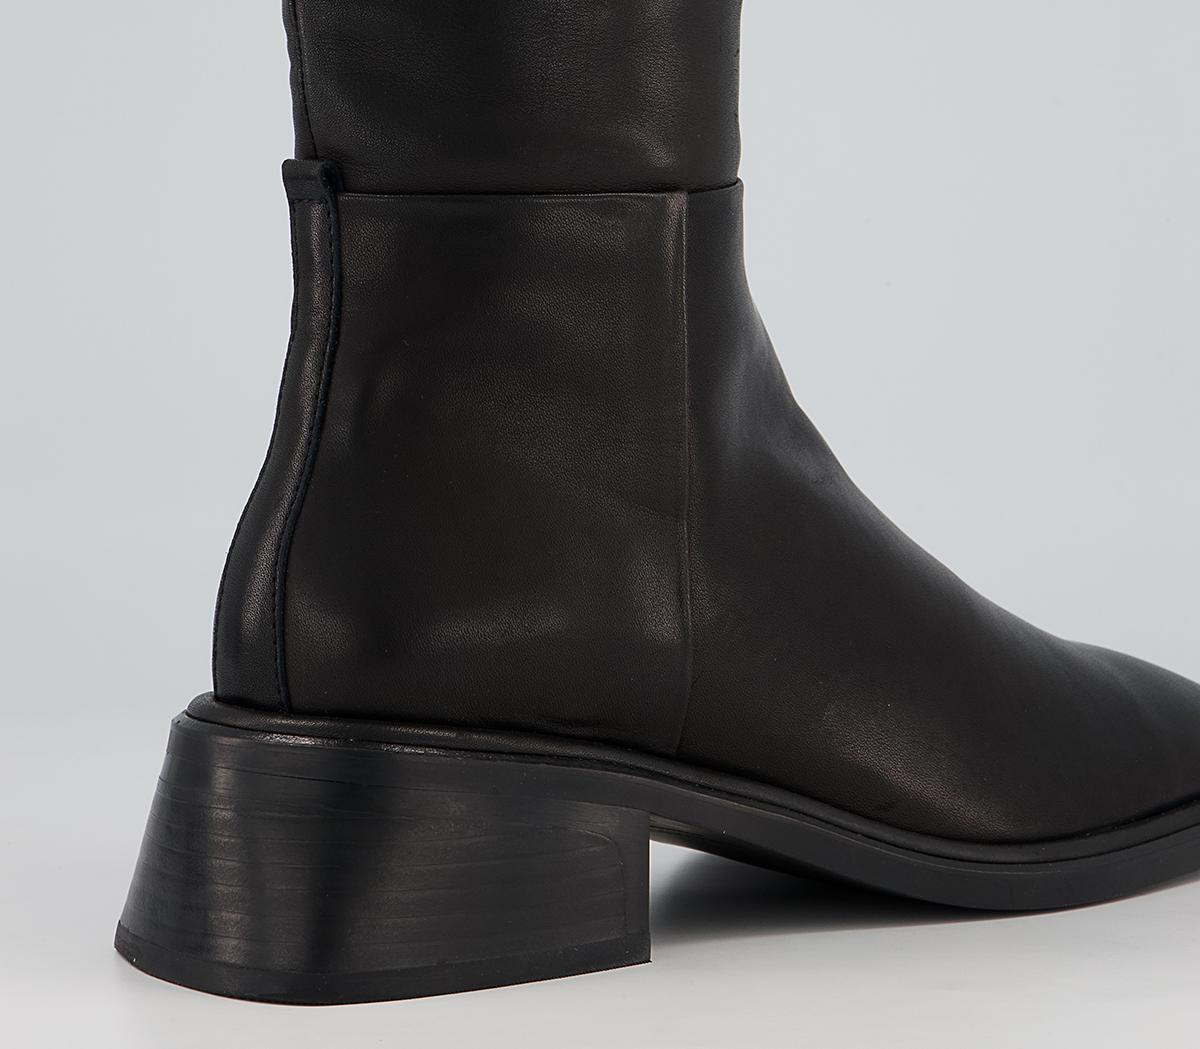 Atelier by Vagabond Neema Tall Boots Black - Women's Boots